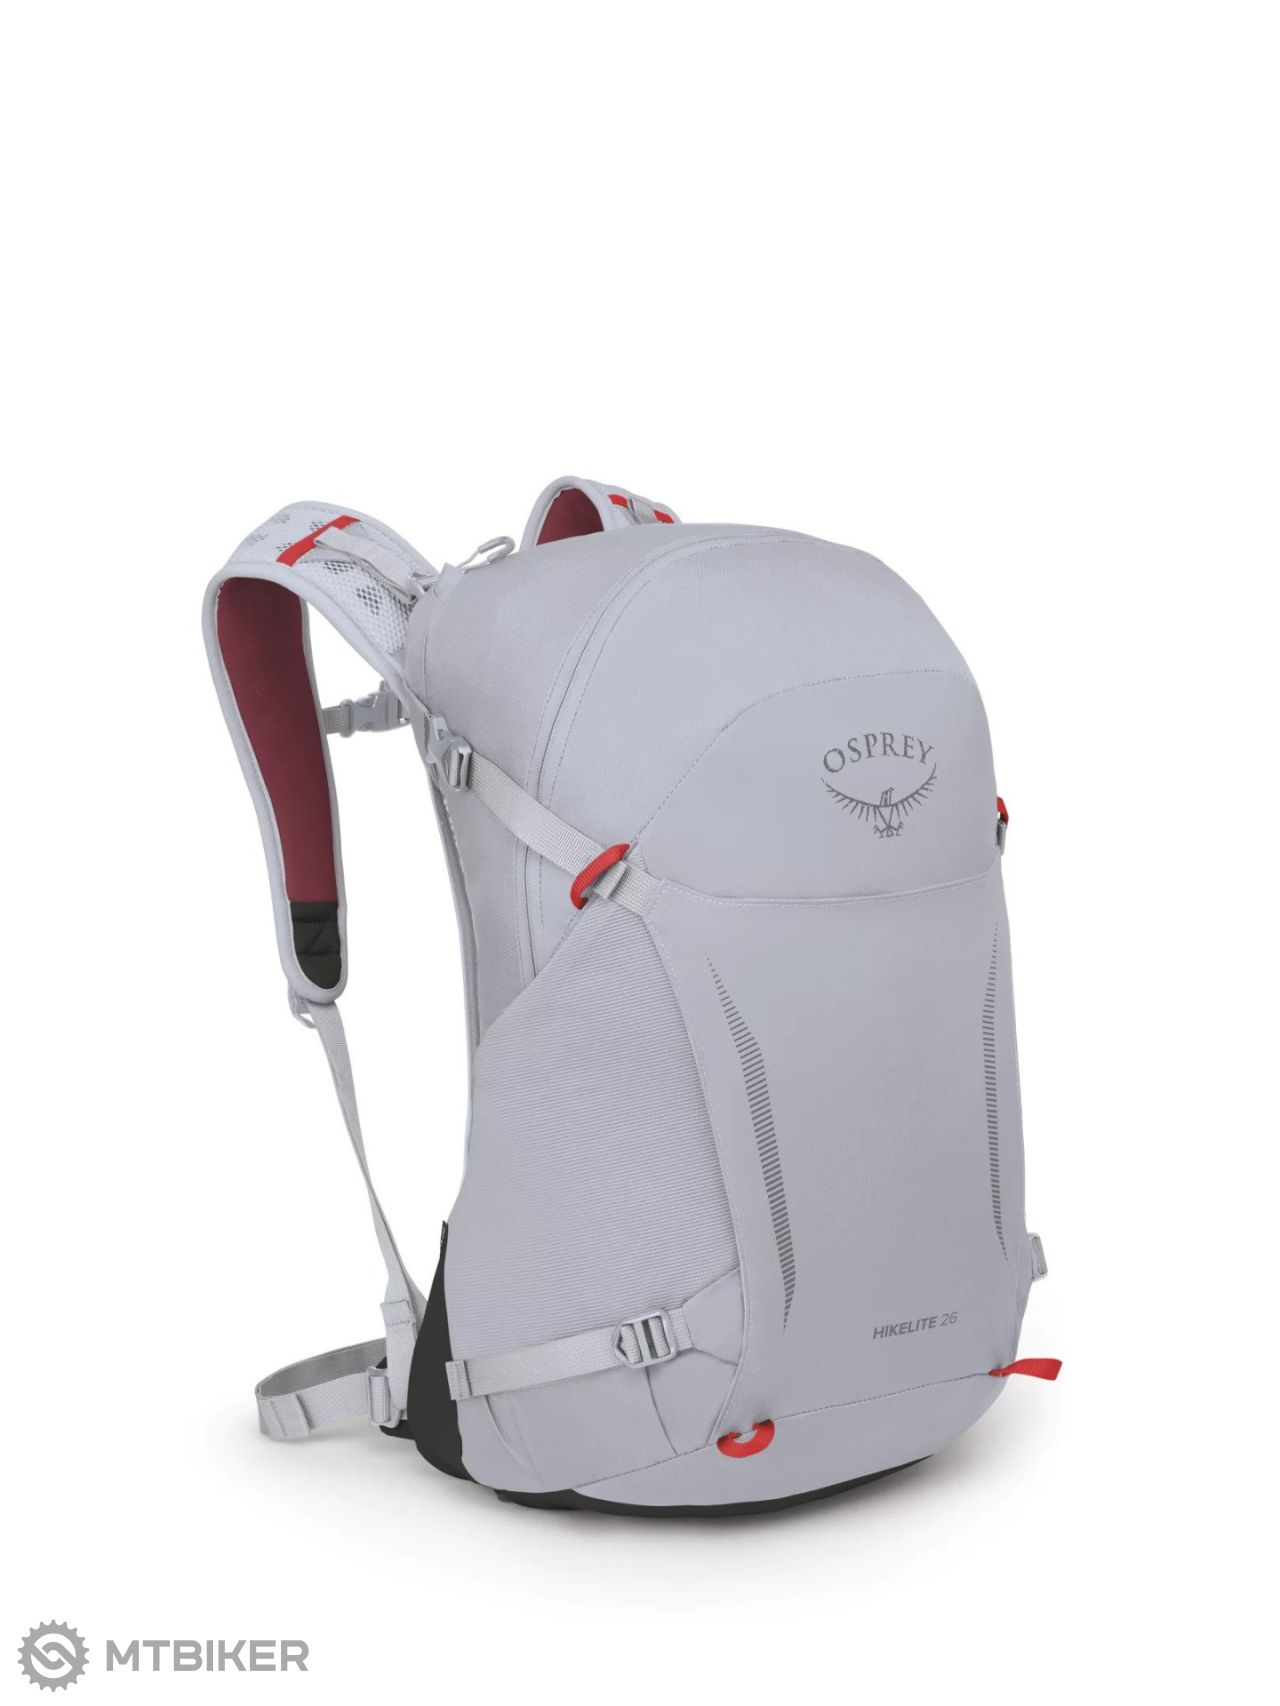 Hikelite backpack, 26 l, - MTBIKER.shop